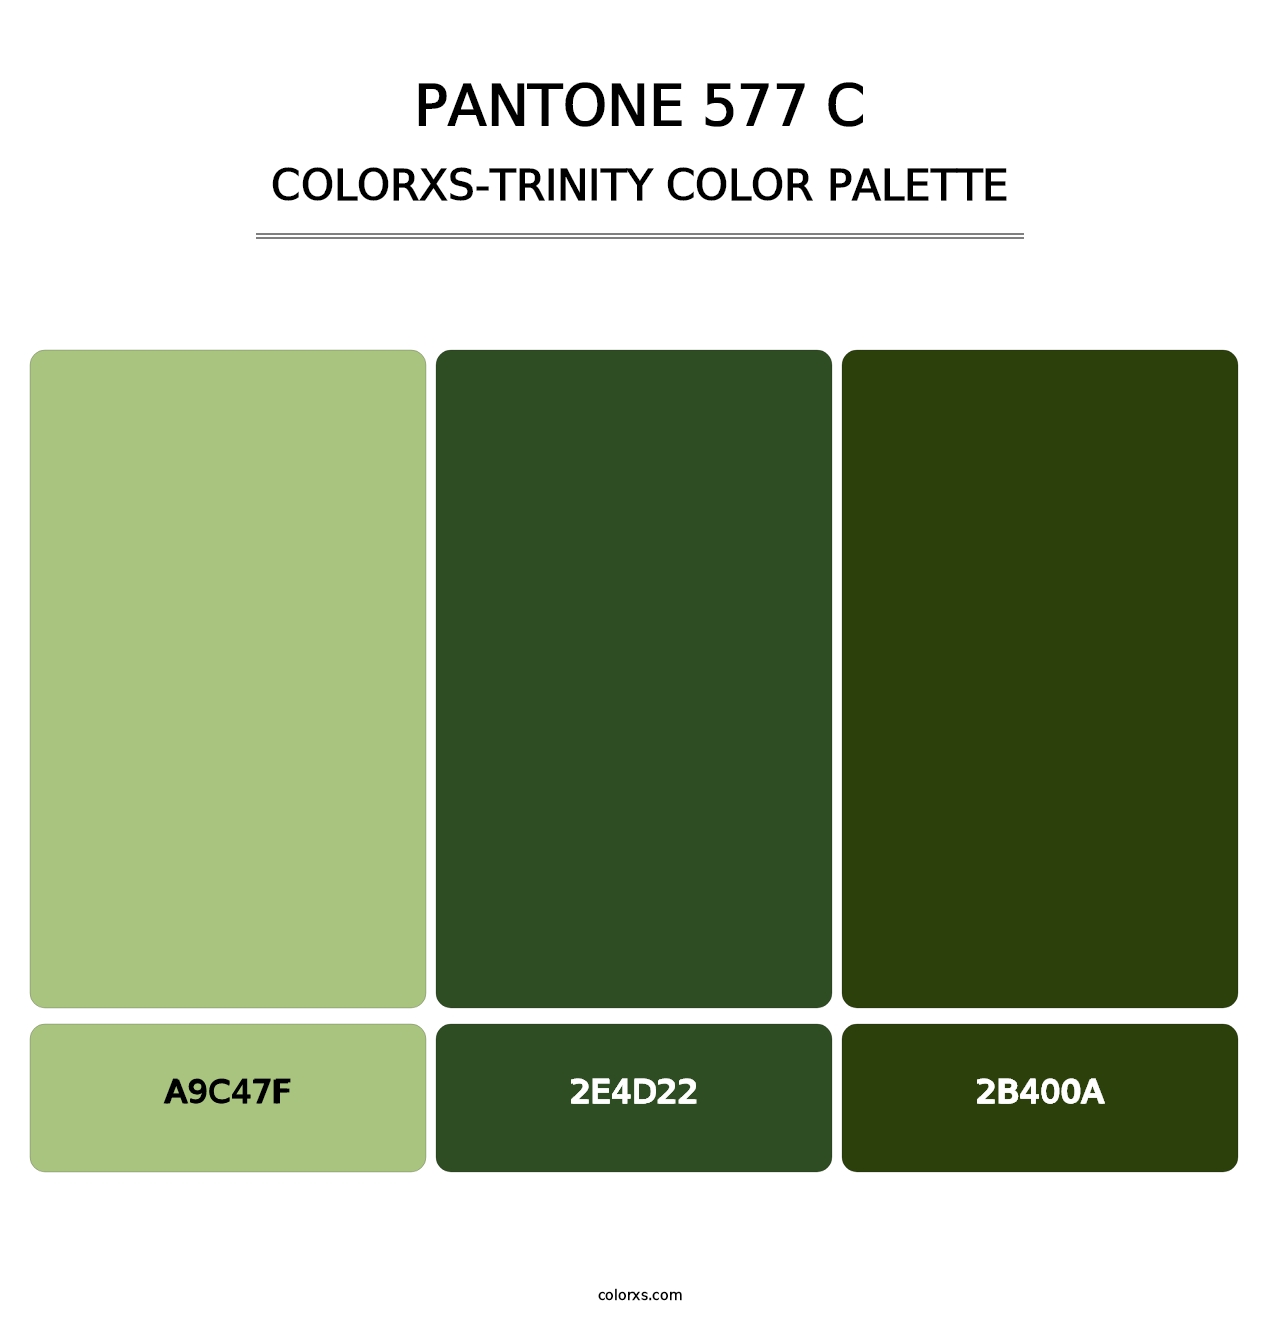 PANTONE 577 C - Colorxs Trinity Palette